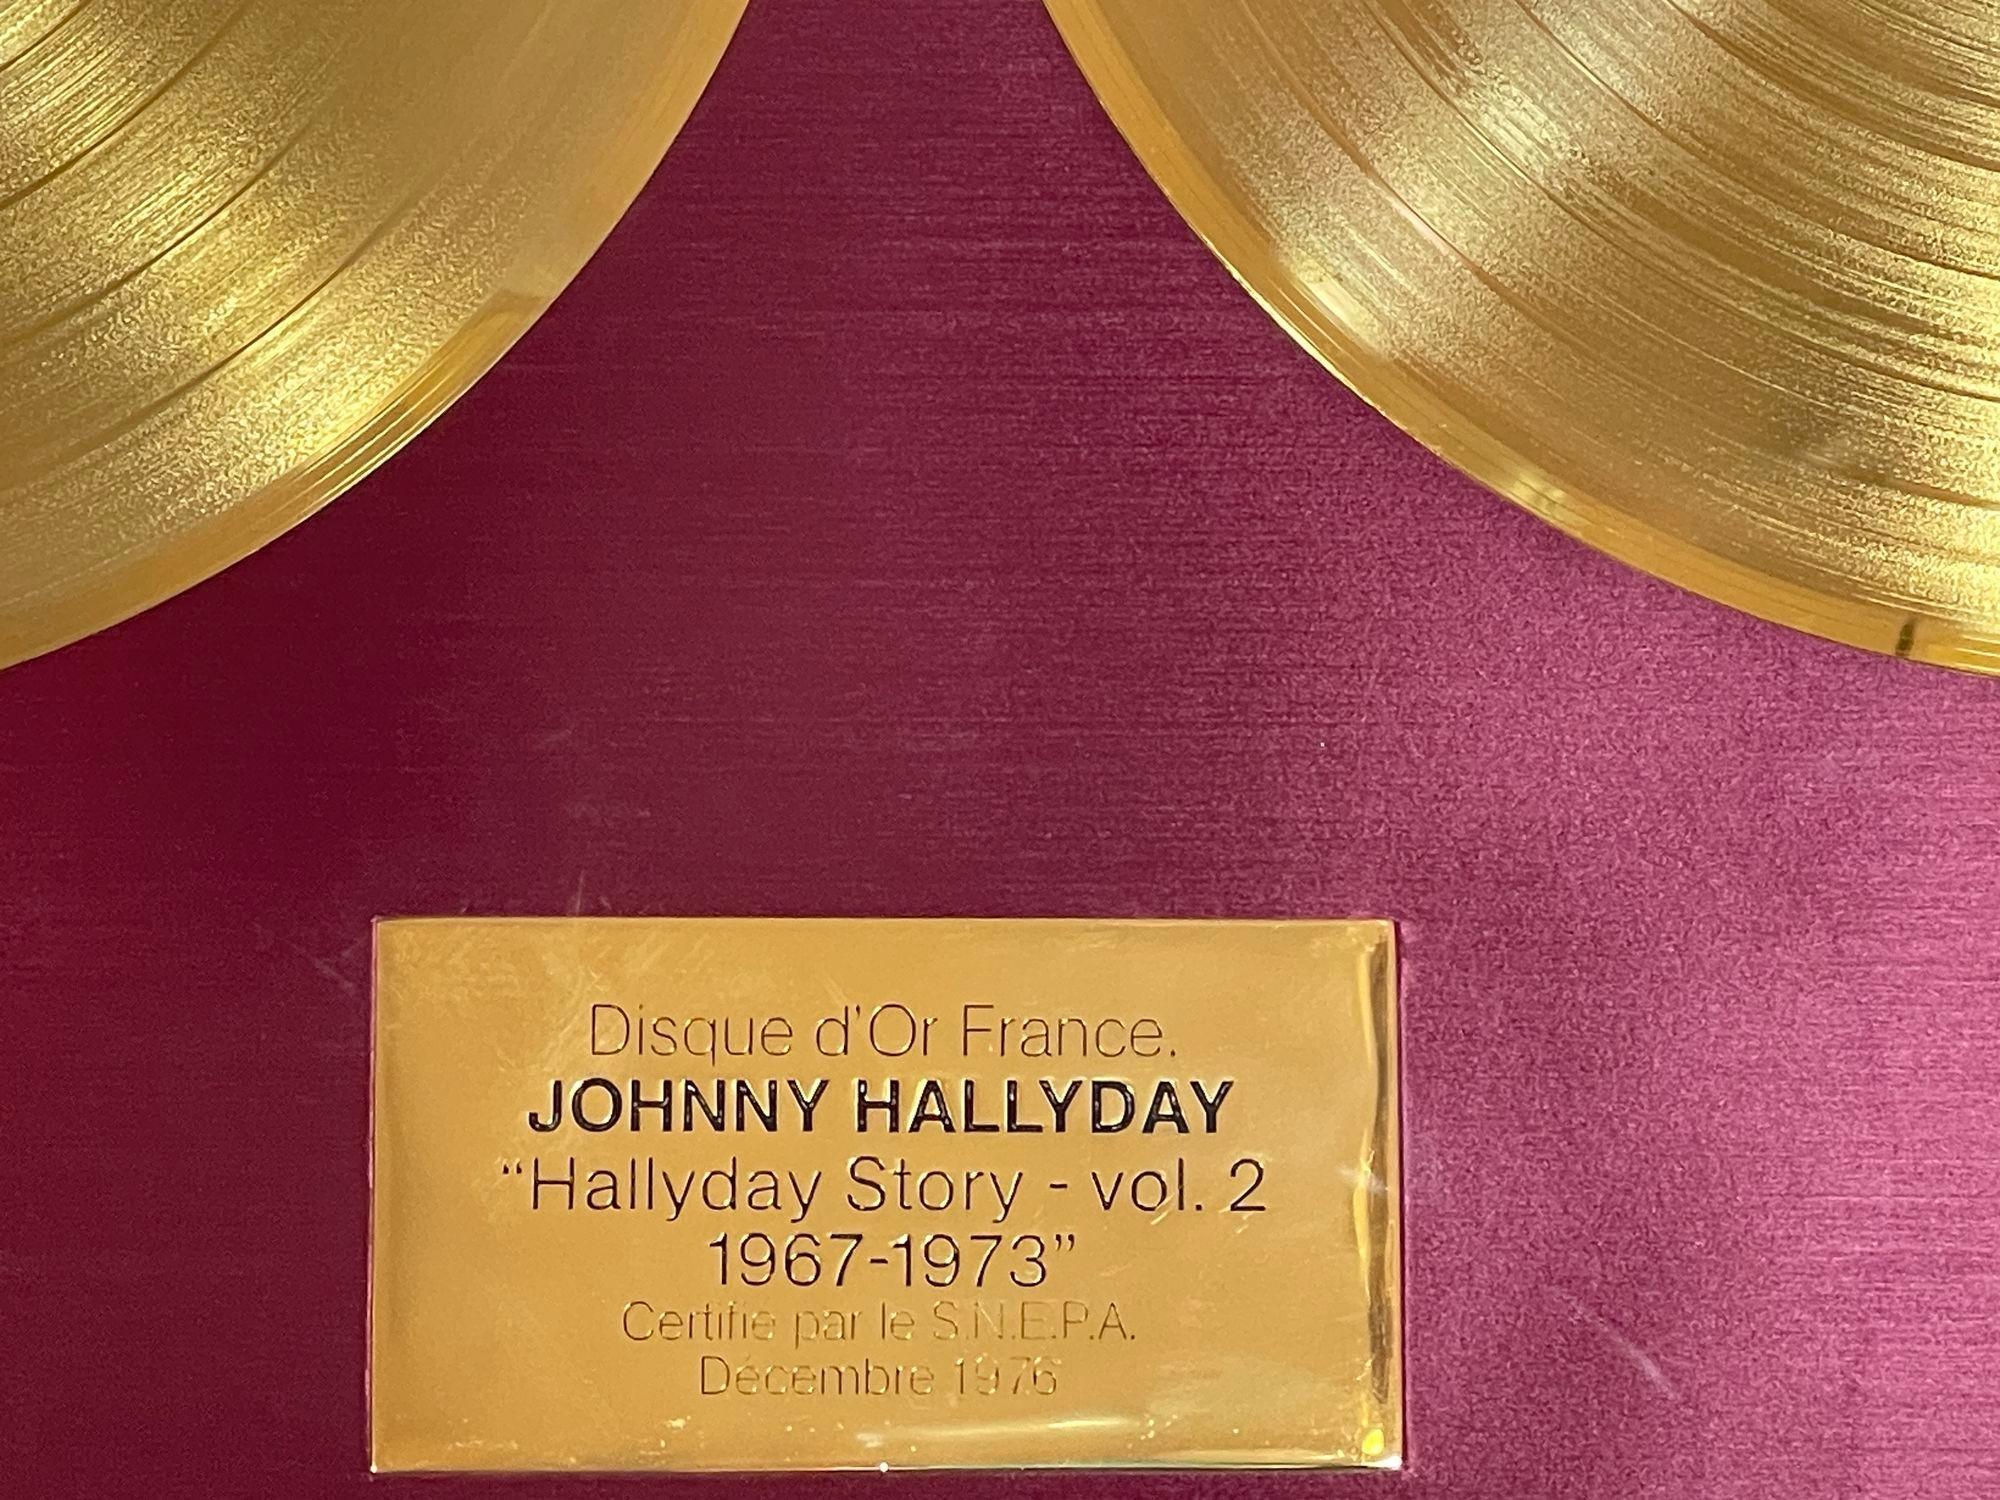 offizieller Gold Record Award Frankreich Johnny Halliday Story 1967-1973 Vol.2 im Angebot 1